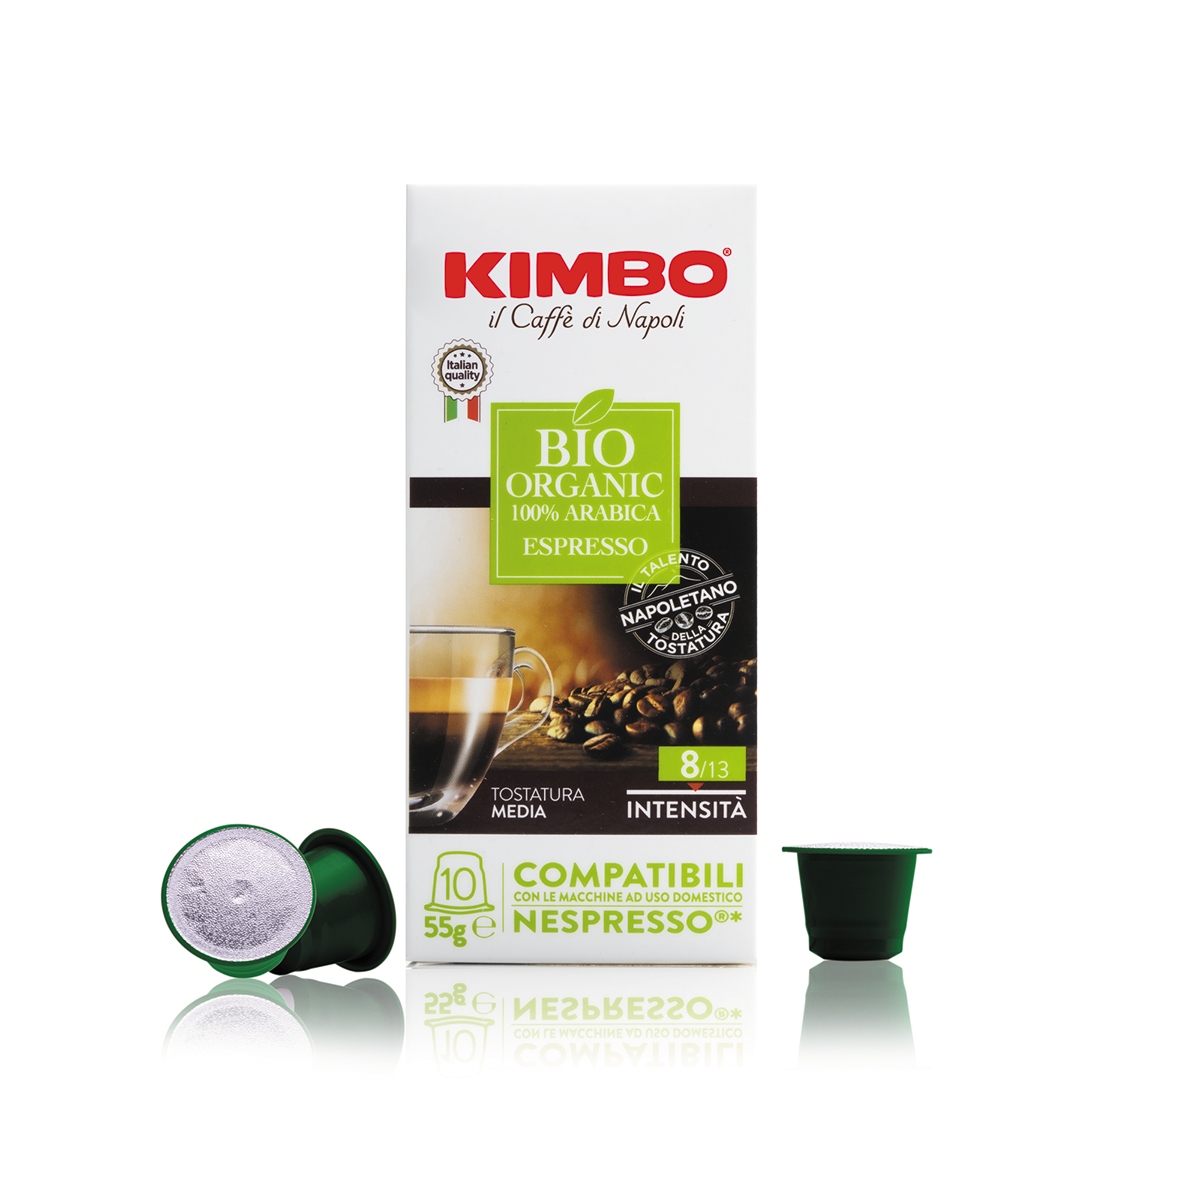 Bio-Organic - Capsules compatible with Nespresso® Original* machines